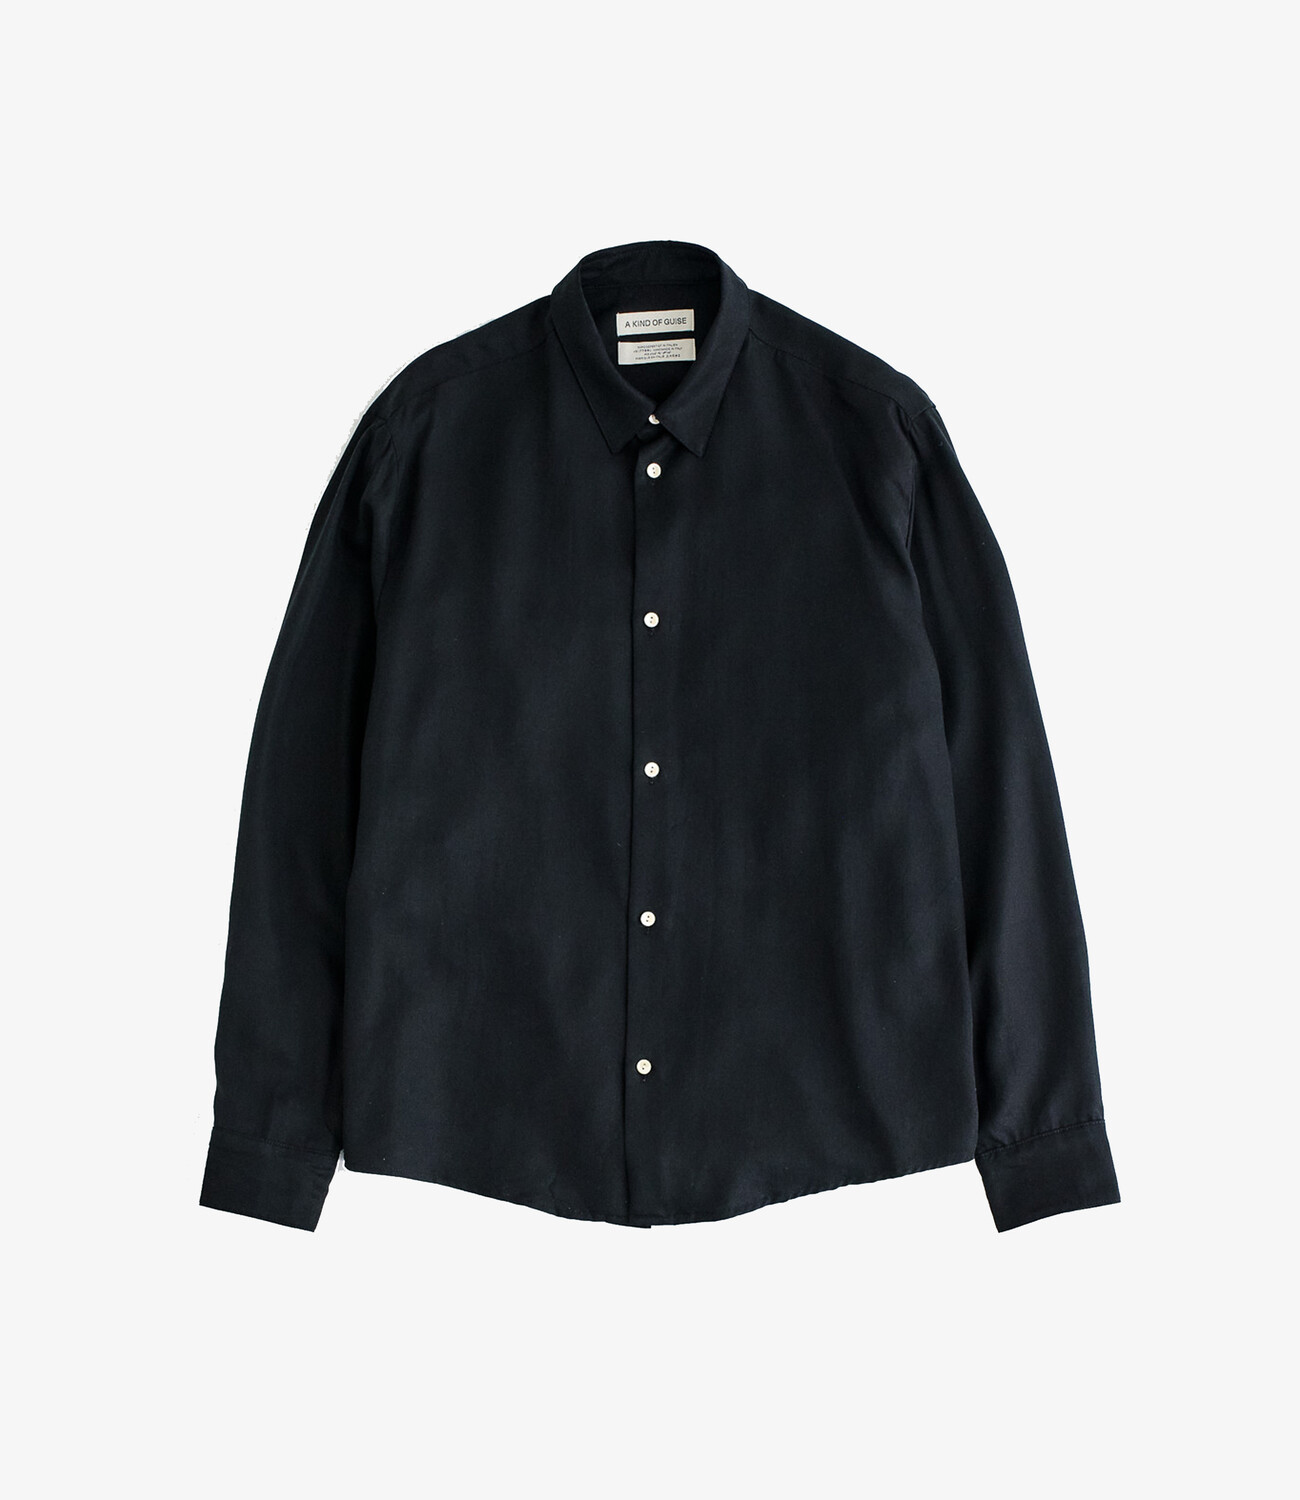 Fulvio shirt - Melted black